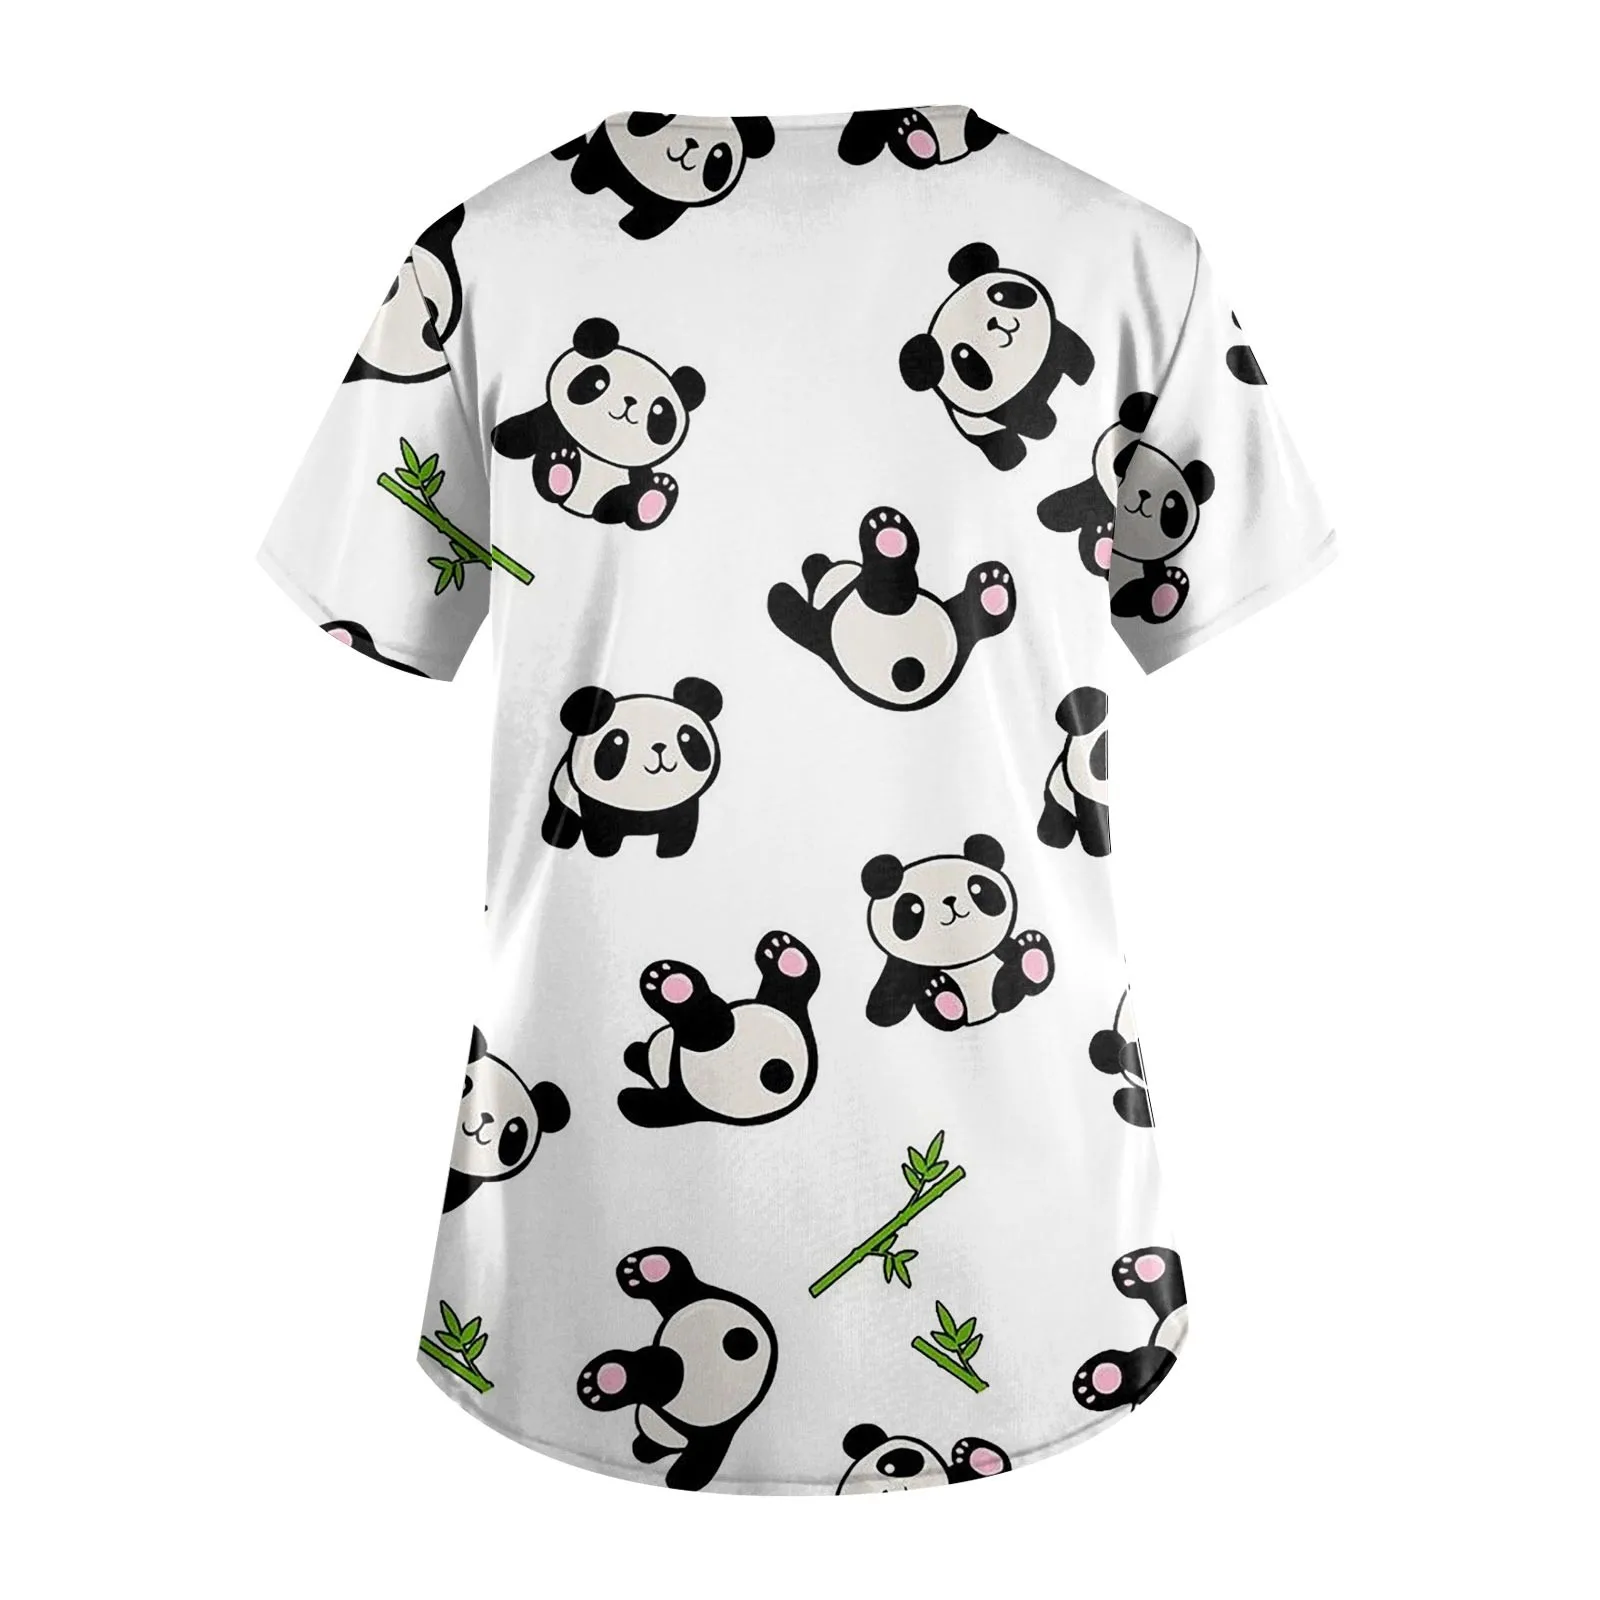 Uniforme de Trabalho Enfermeira, Camiseta Panda Bonito,